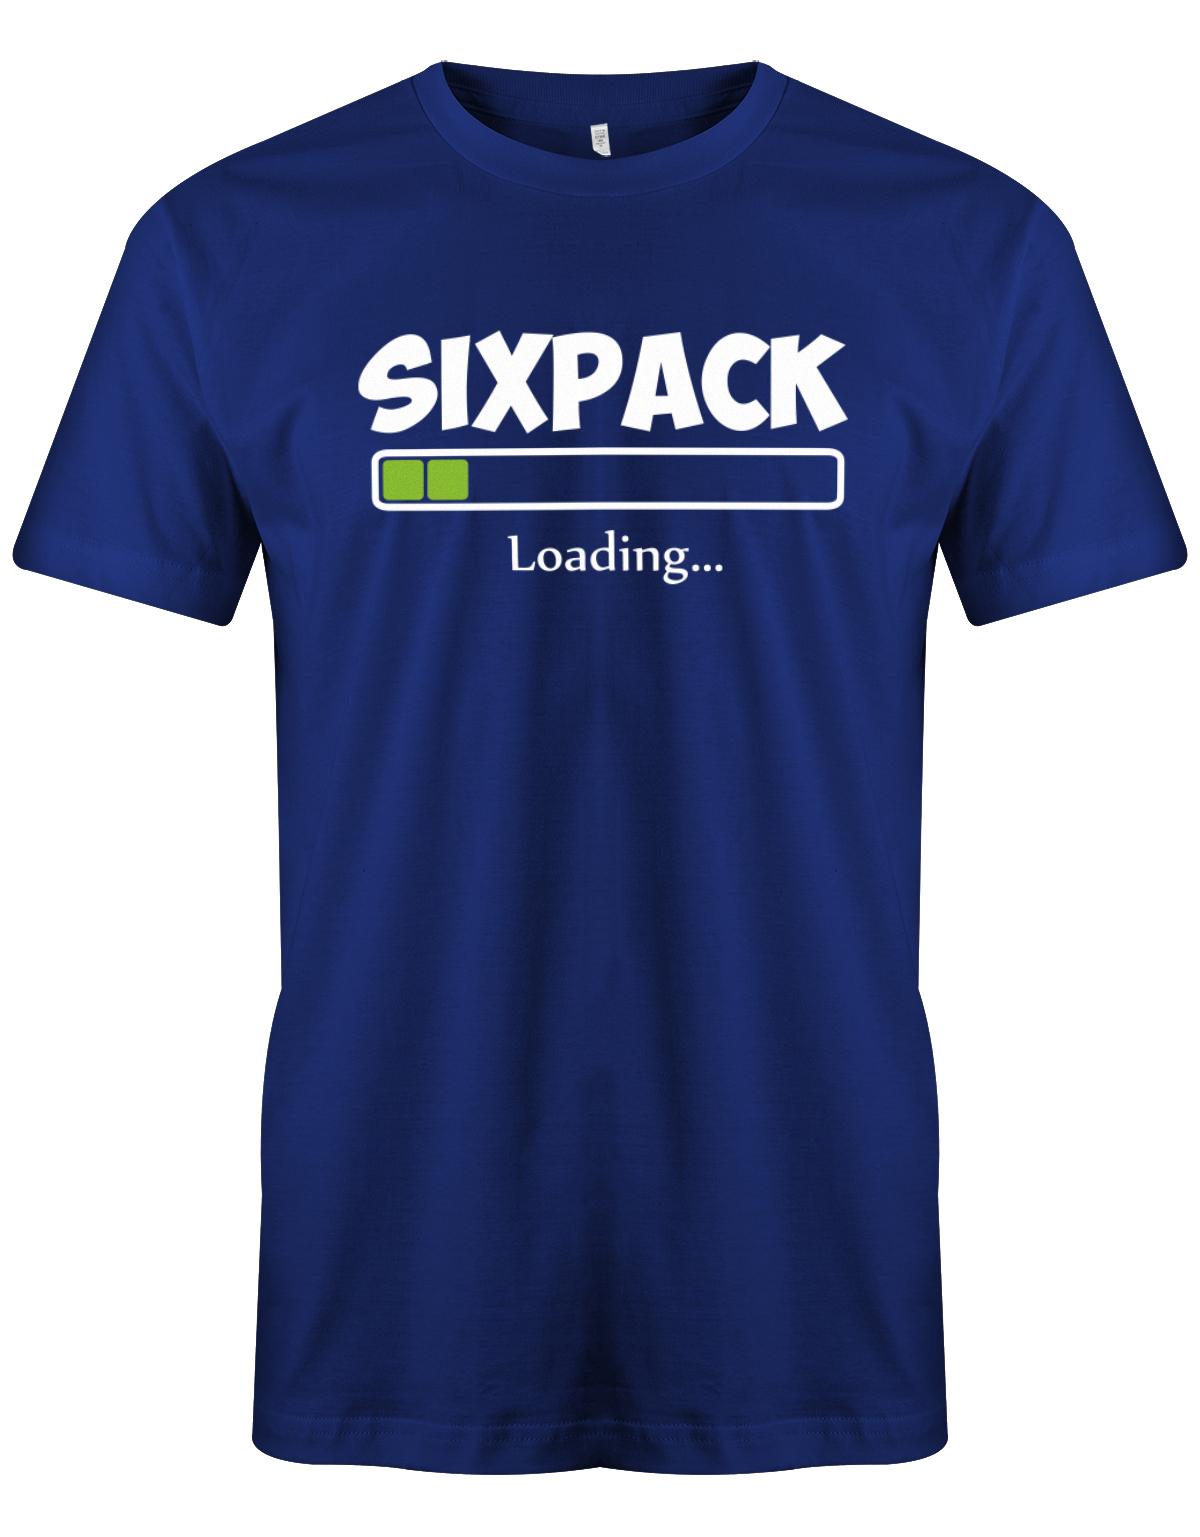 Sixpack-loading-Herren-Shirt-Royablau